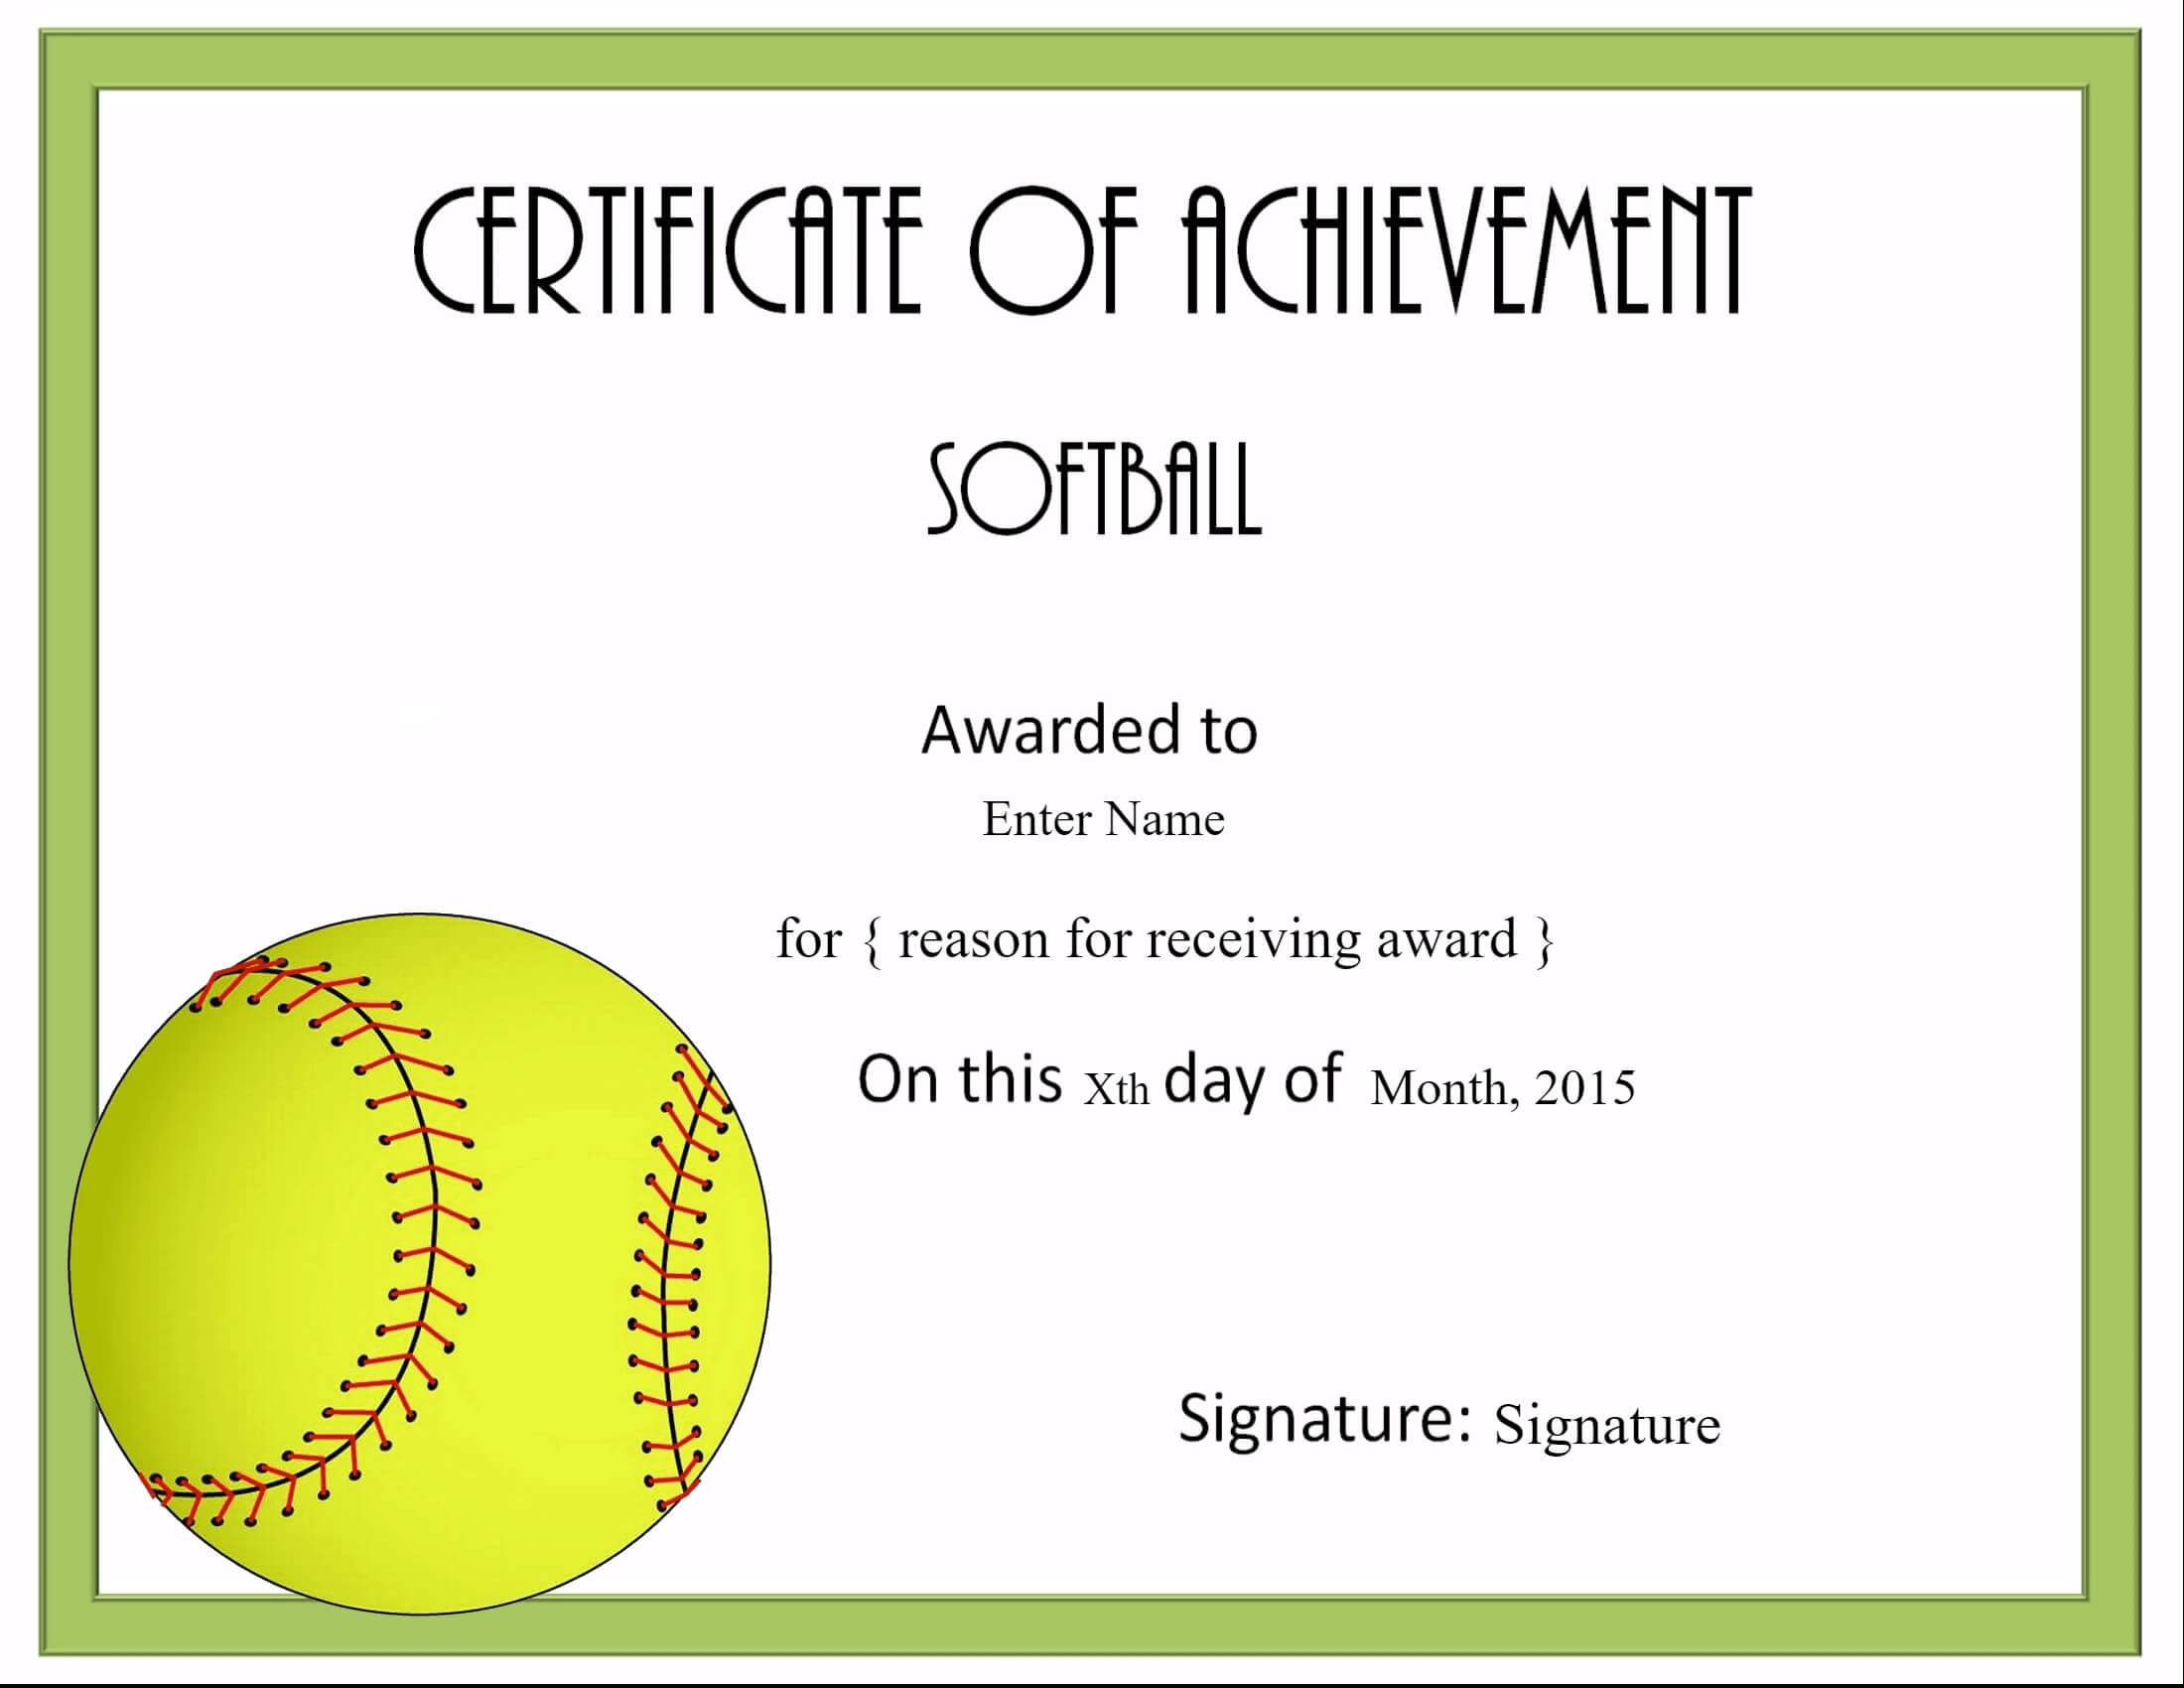 Free Softball Certificate Templates - Customize Online With Regard To Softball Certificate Templates Free